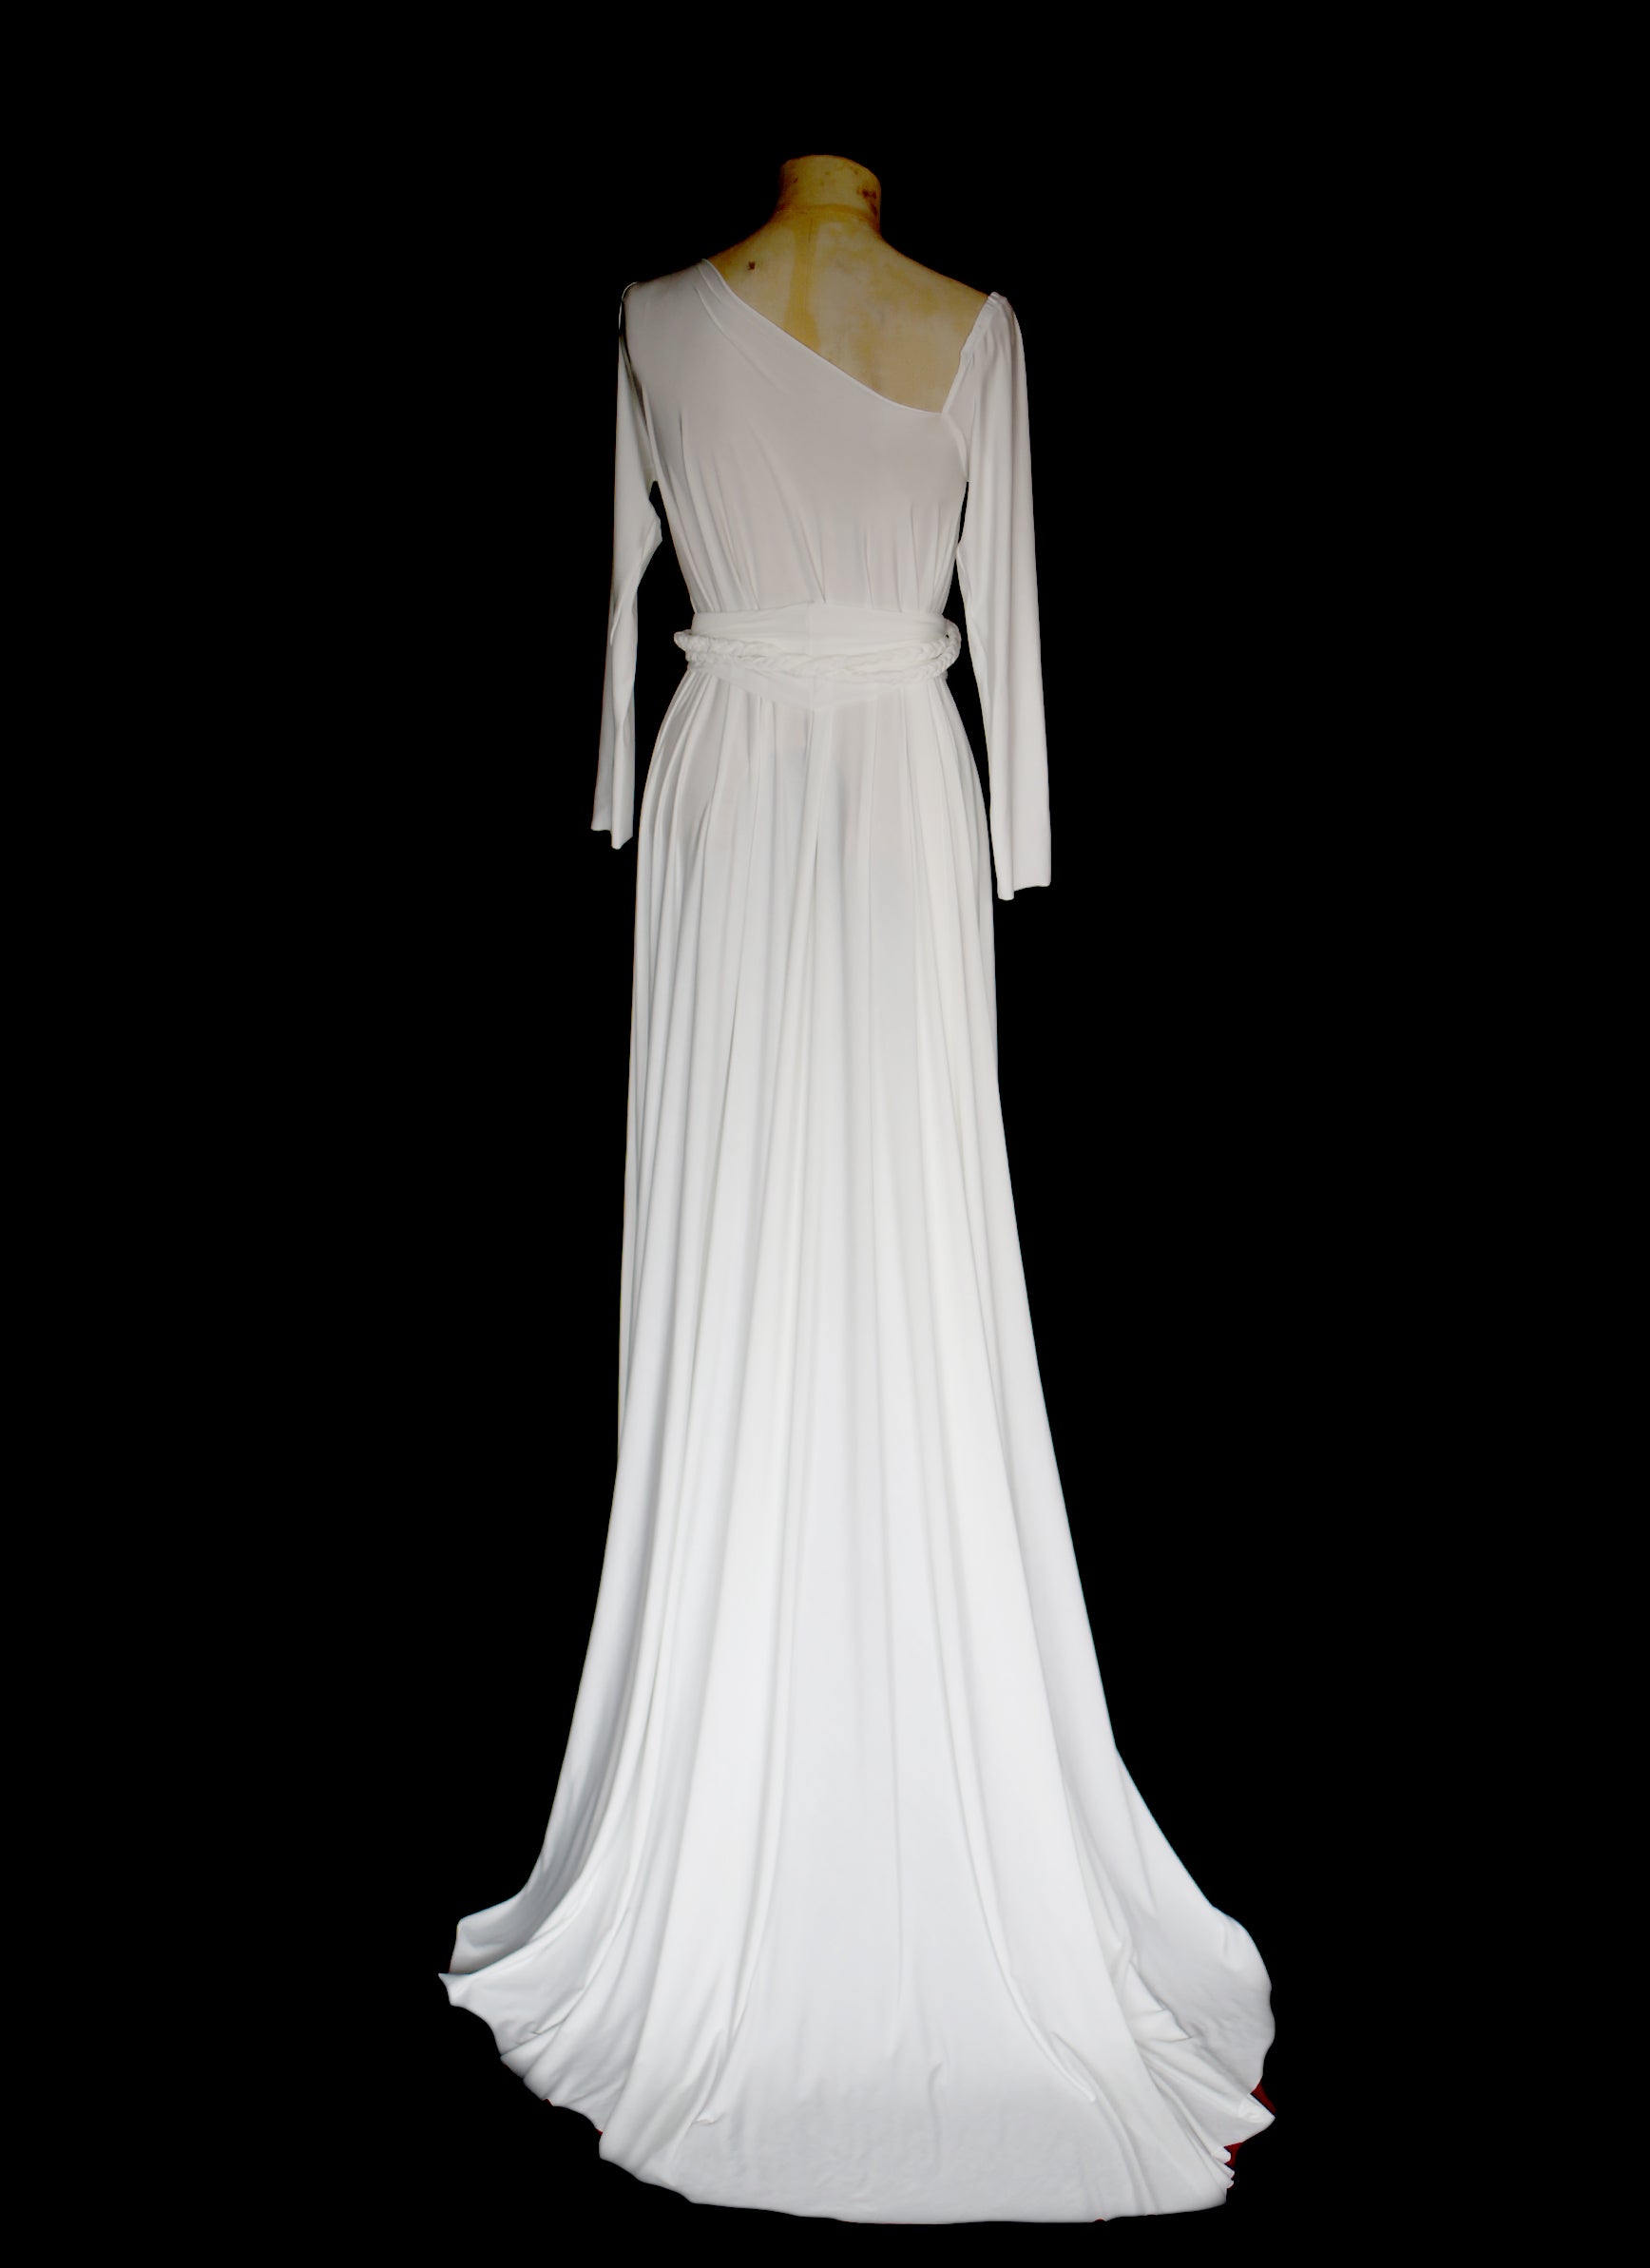 Greek Wedding Dresses: 21 Goddesses Styles + FAQs | Greek wedding dresses, Greek  goddess wedding dress, Grecian wedding